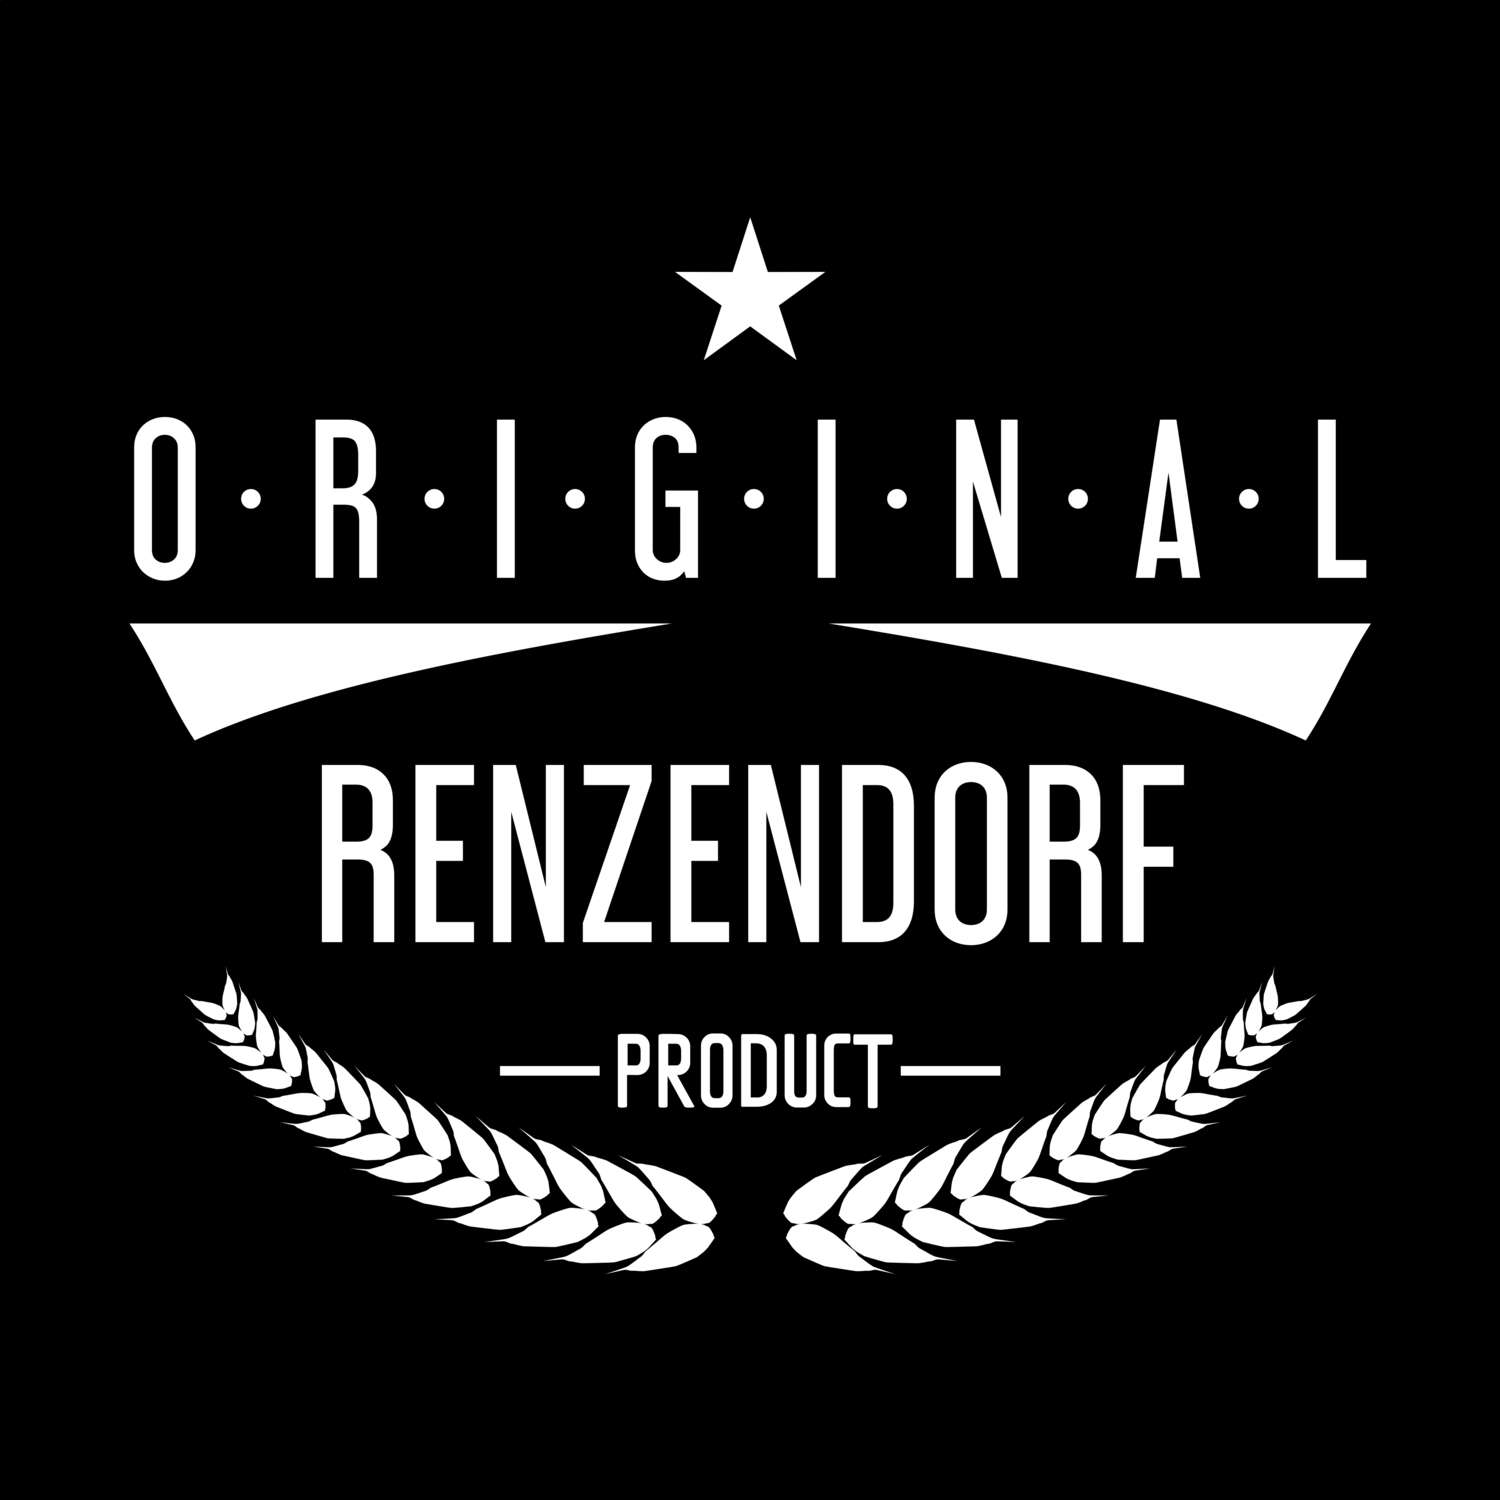 Renzendorf T-Shirt »Original Product«